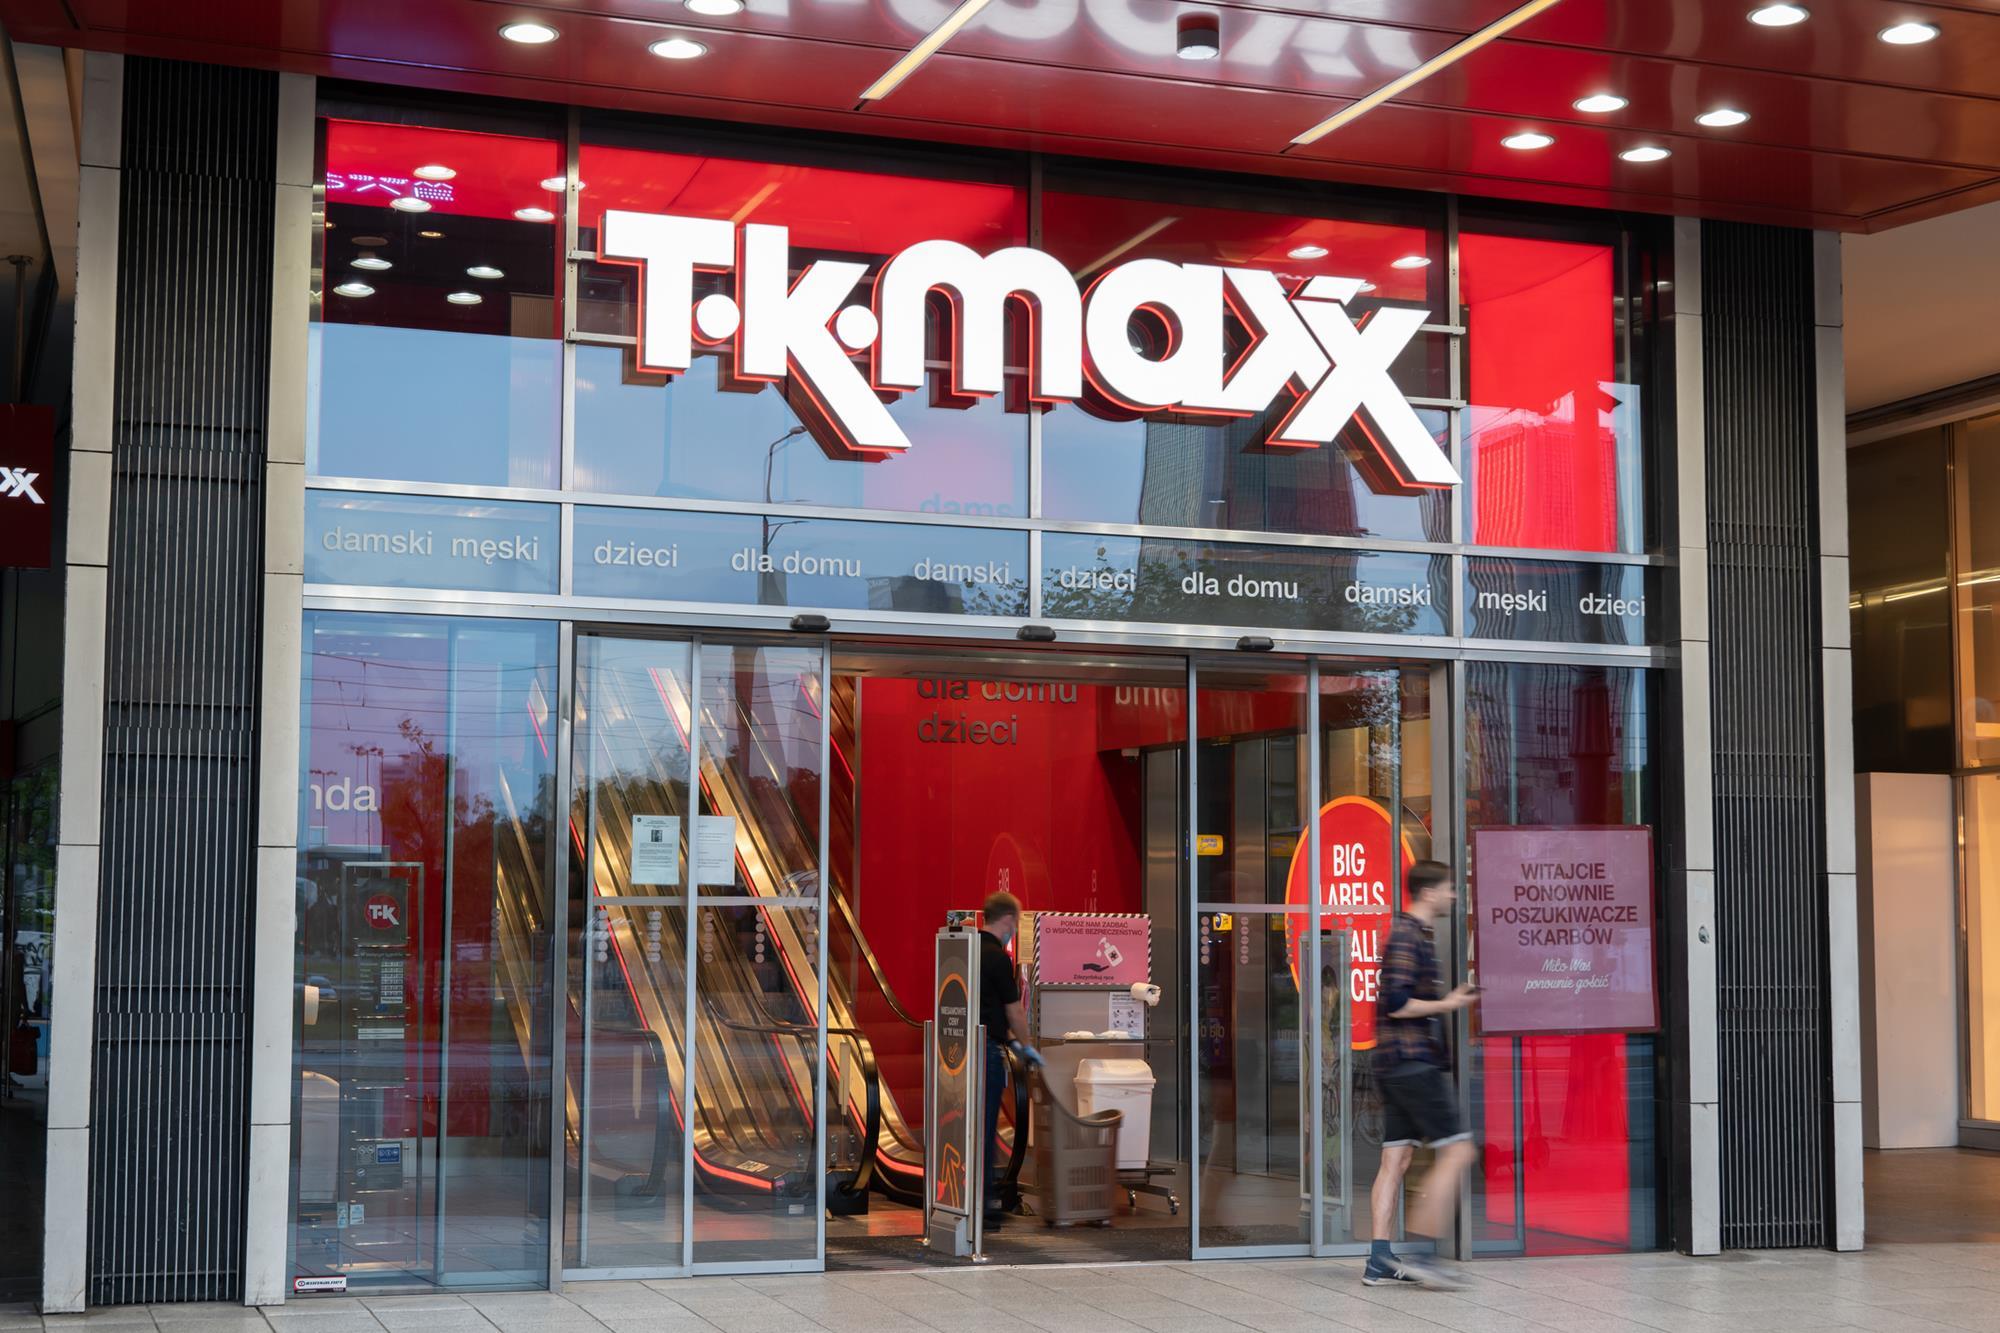 Strategy spotlight: Five ways TK Maxx's off-price business model